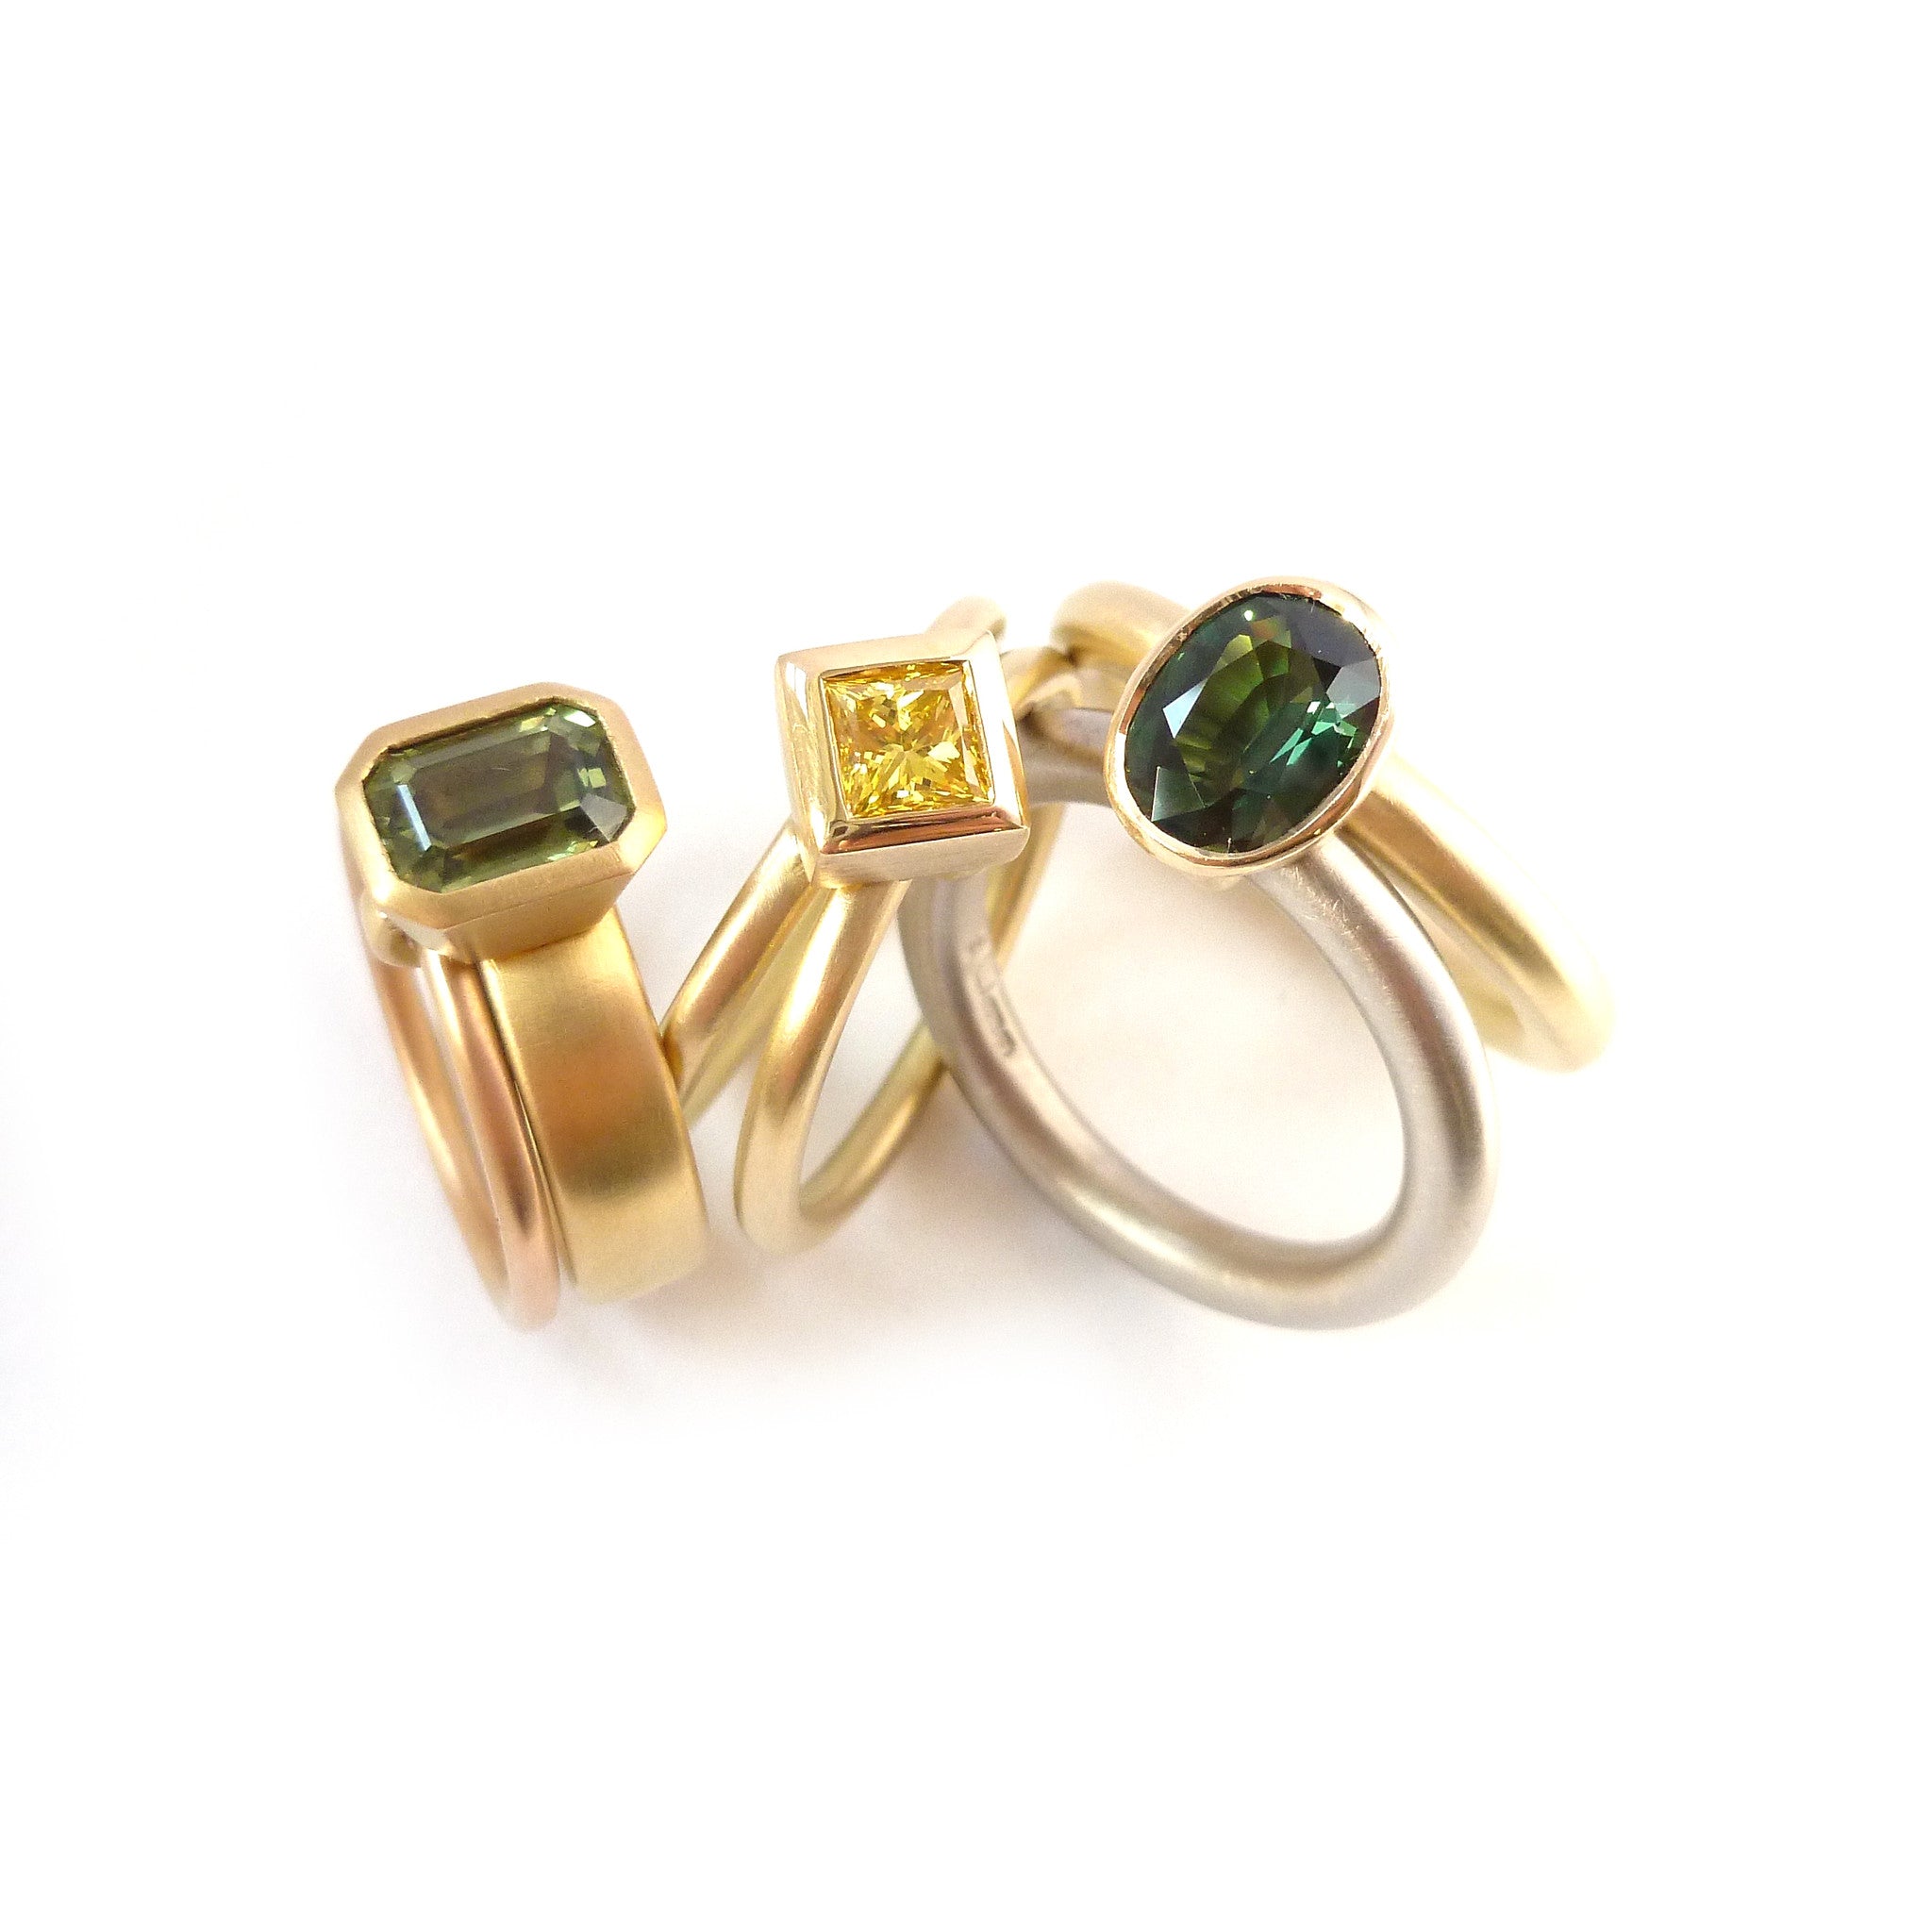 Bespoke green sapphire designer ring. Rose and yellow gold